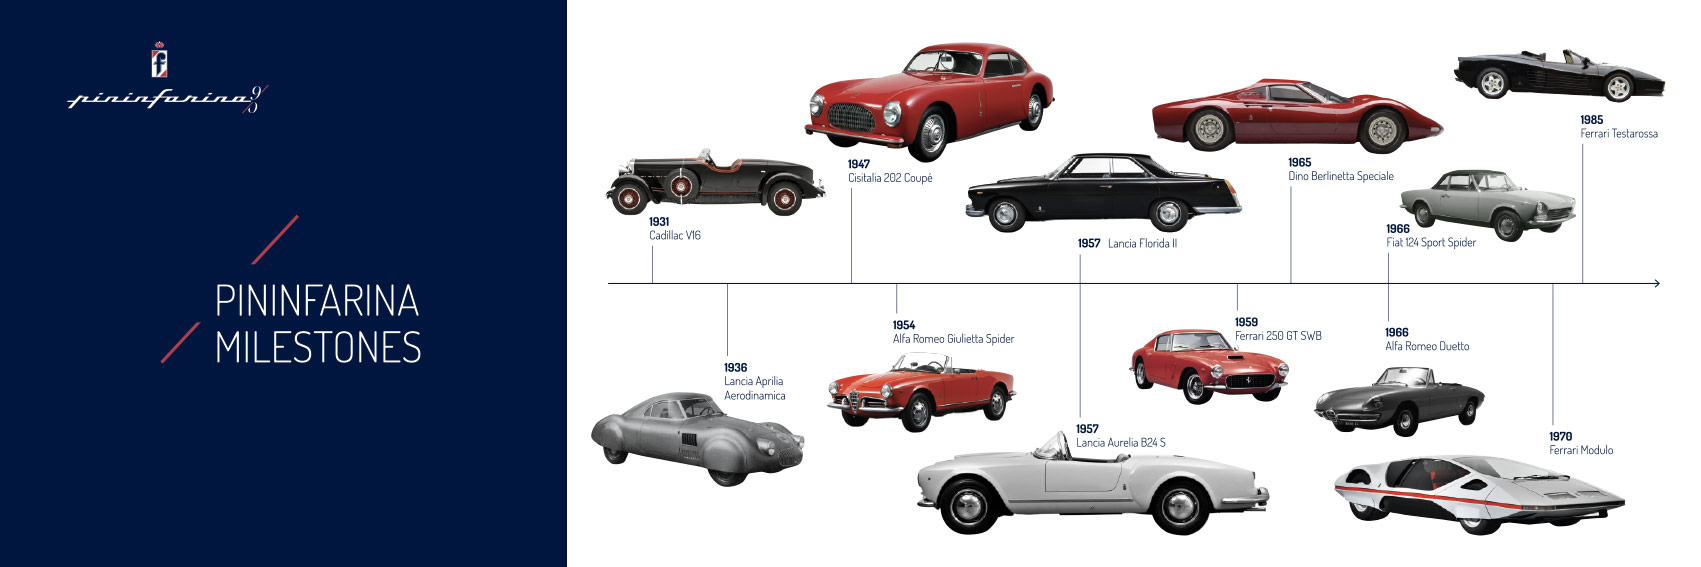 L'histoire Pininfarina